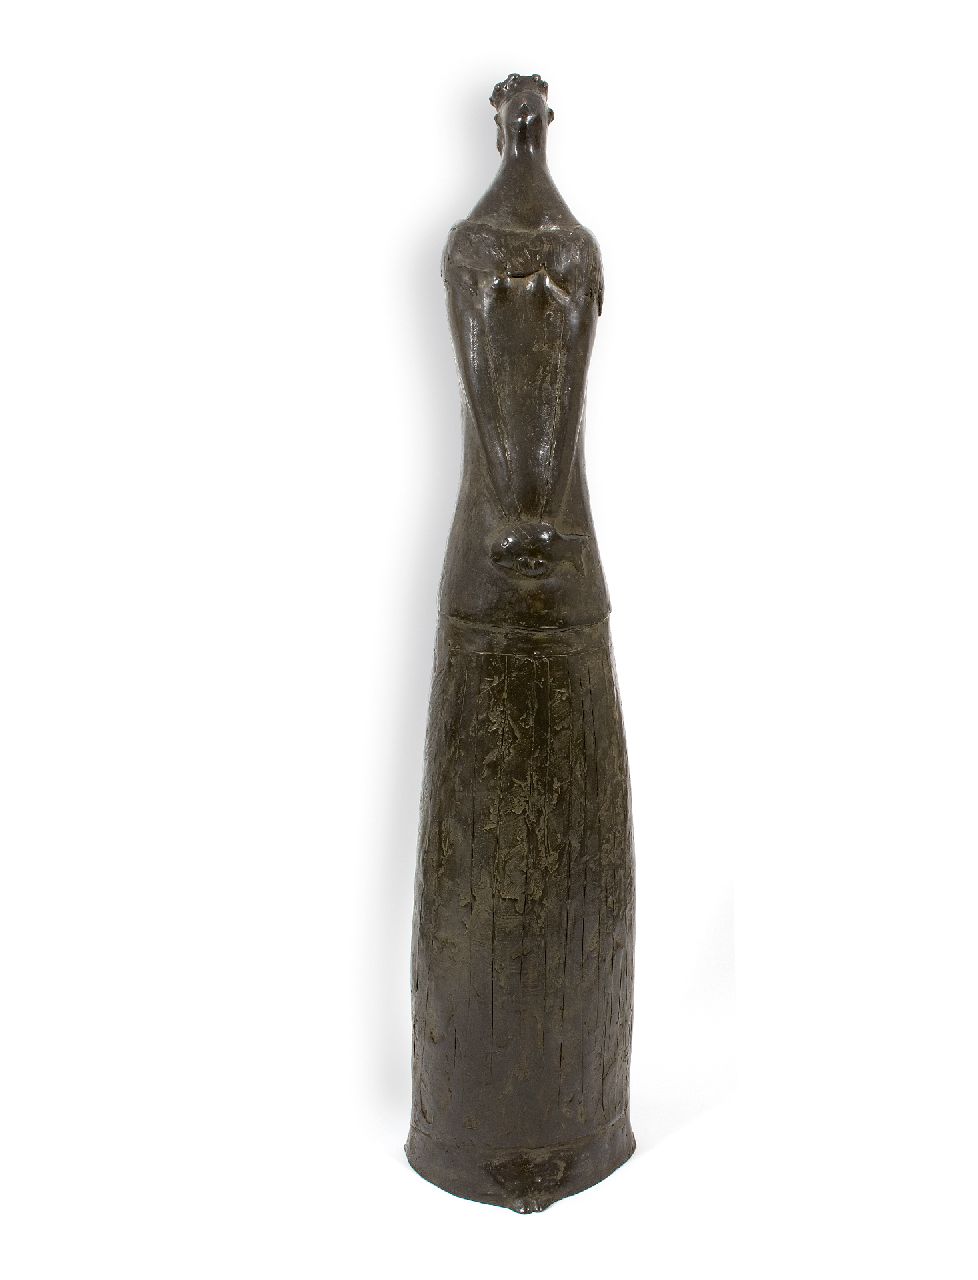 Hemert E. van | Evert van Hemert, Der Ruhm des Zaubers II, Bronze 110,0 cm, signed on the base und zu datieren 2014